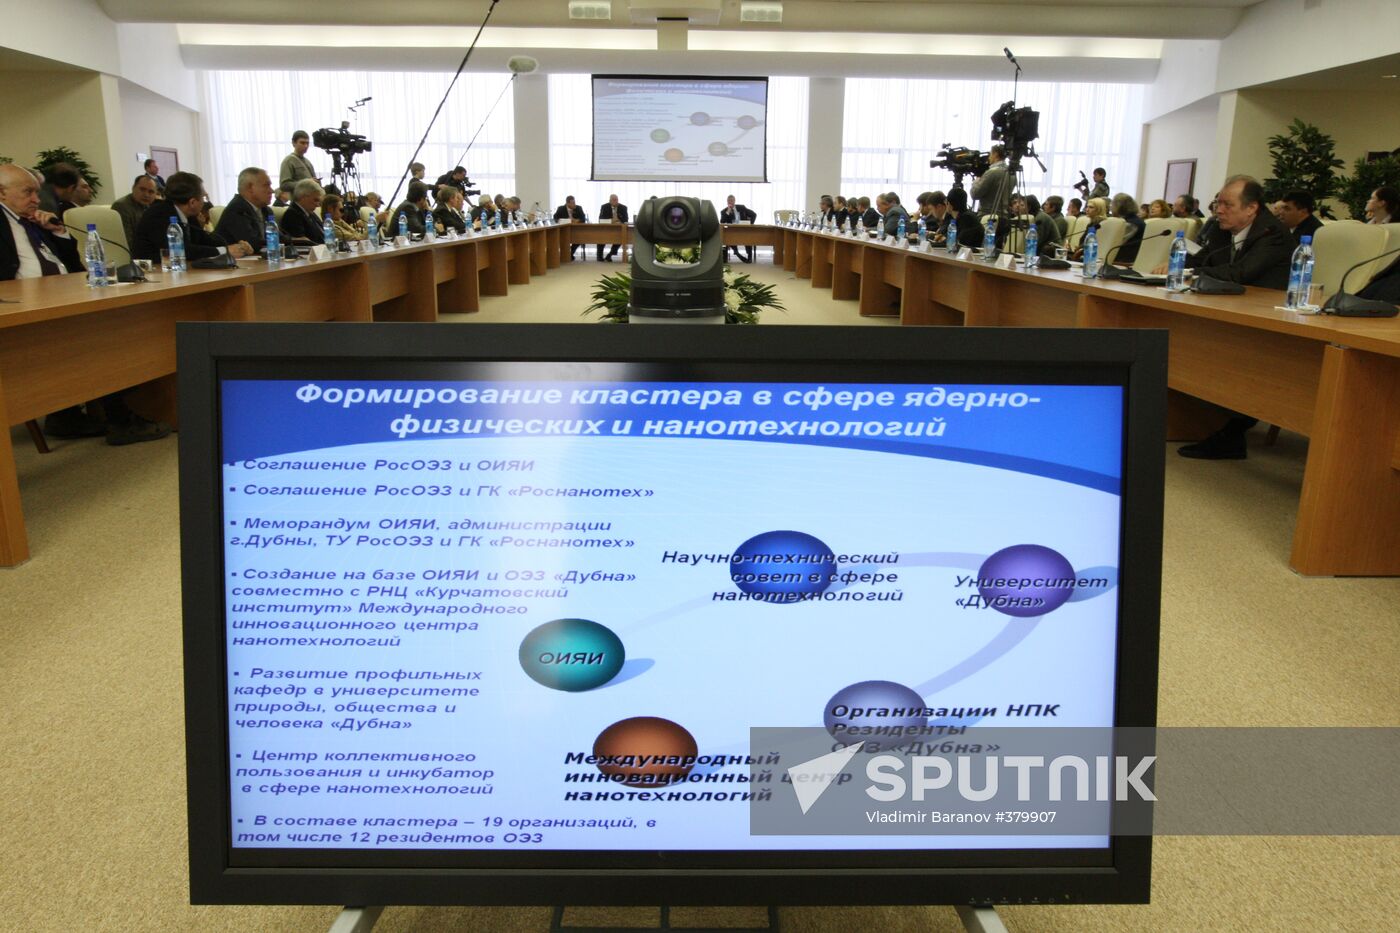 Presentation of Dubna special economic zone